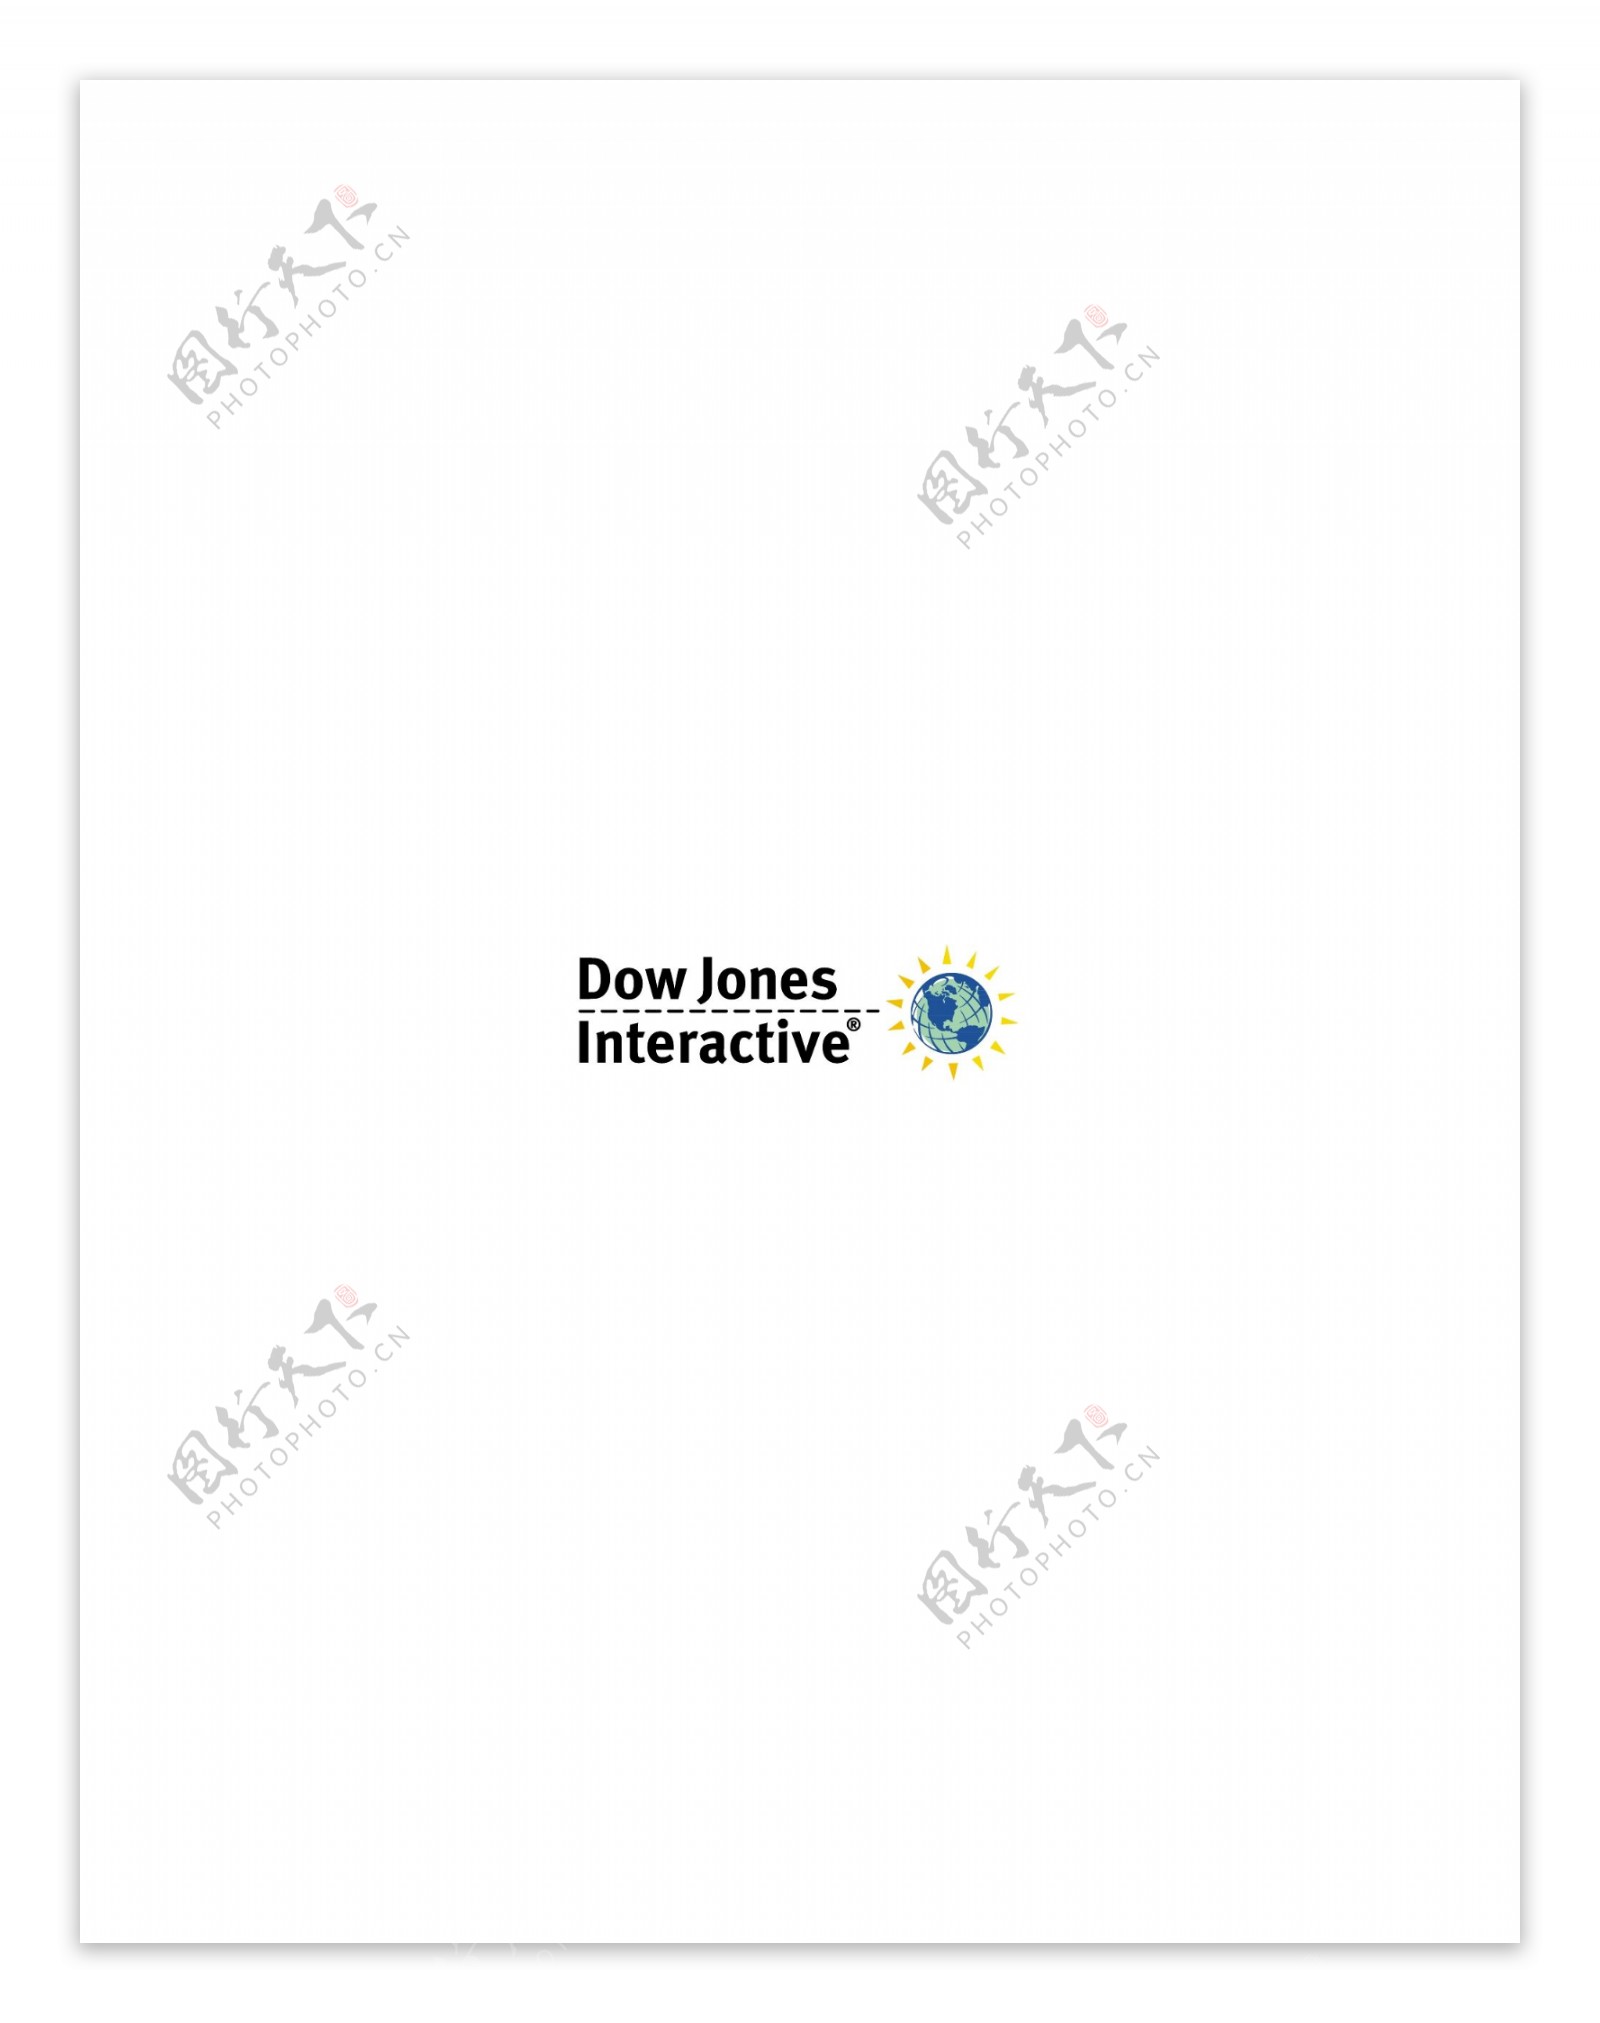 DowJonesInteractivelogo设计欣赏国外知名公司标志范例DowJonesInteractive下载标志设计欣赏